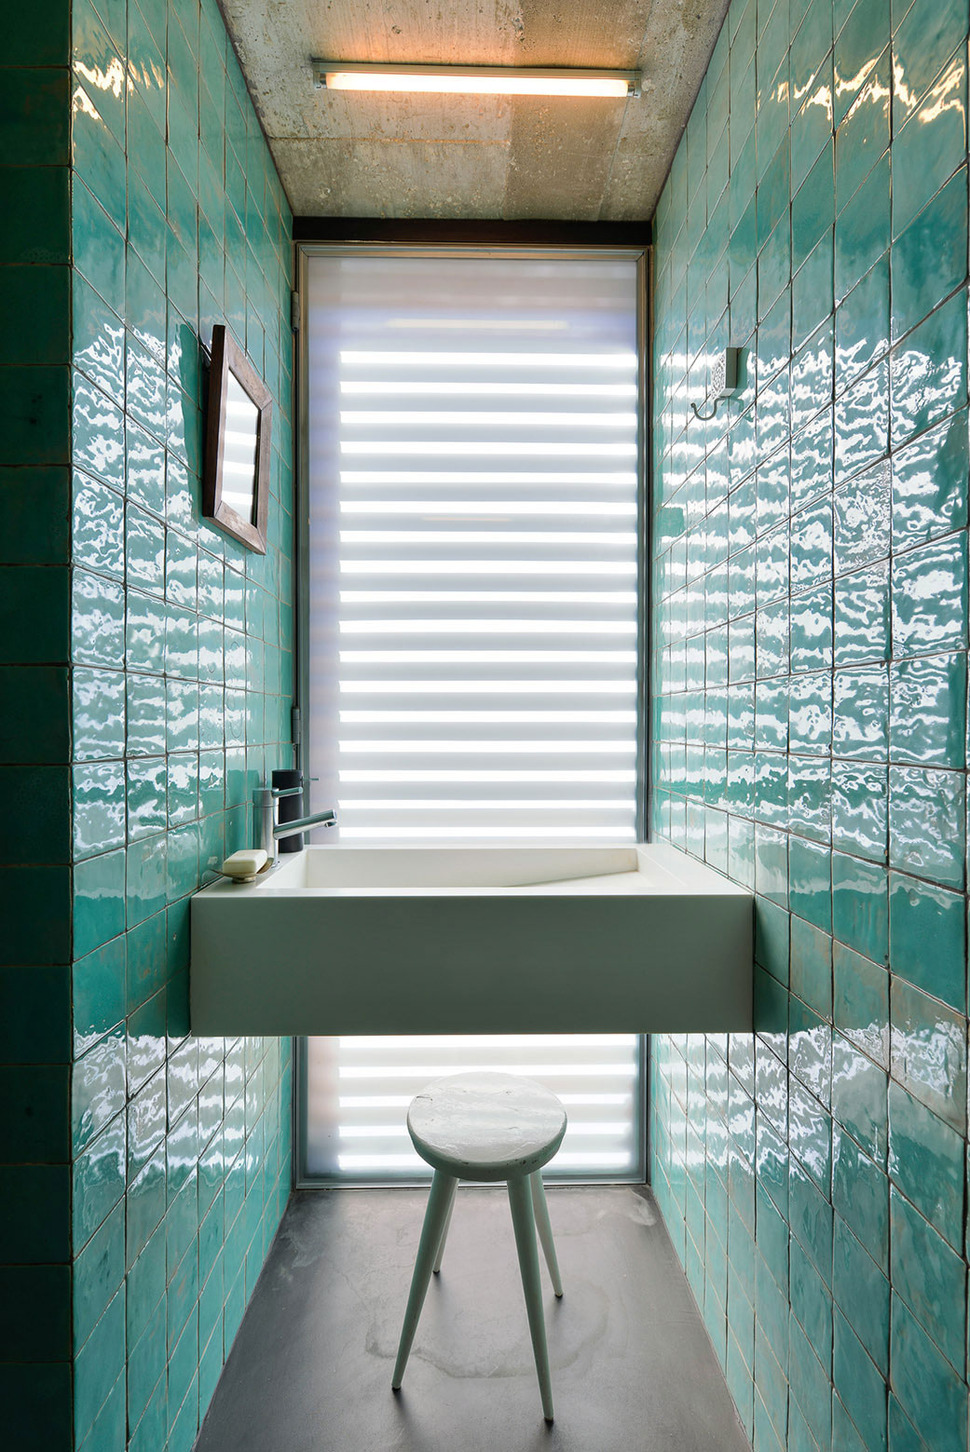 Top 10 Tile Design Ideas for a Modern Bathroom for 2015